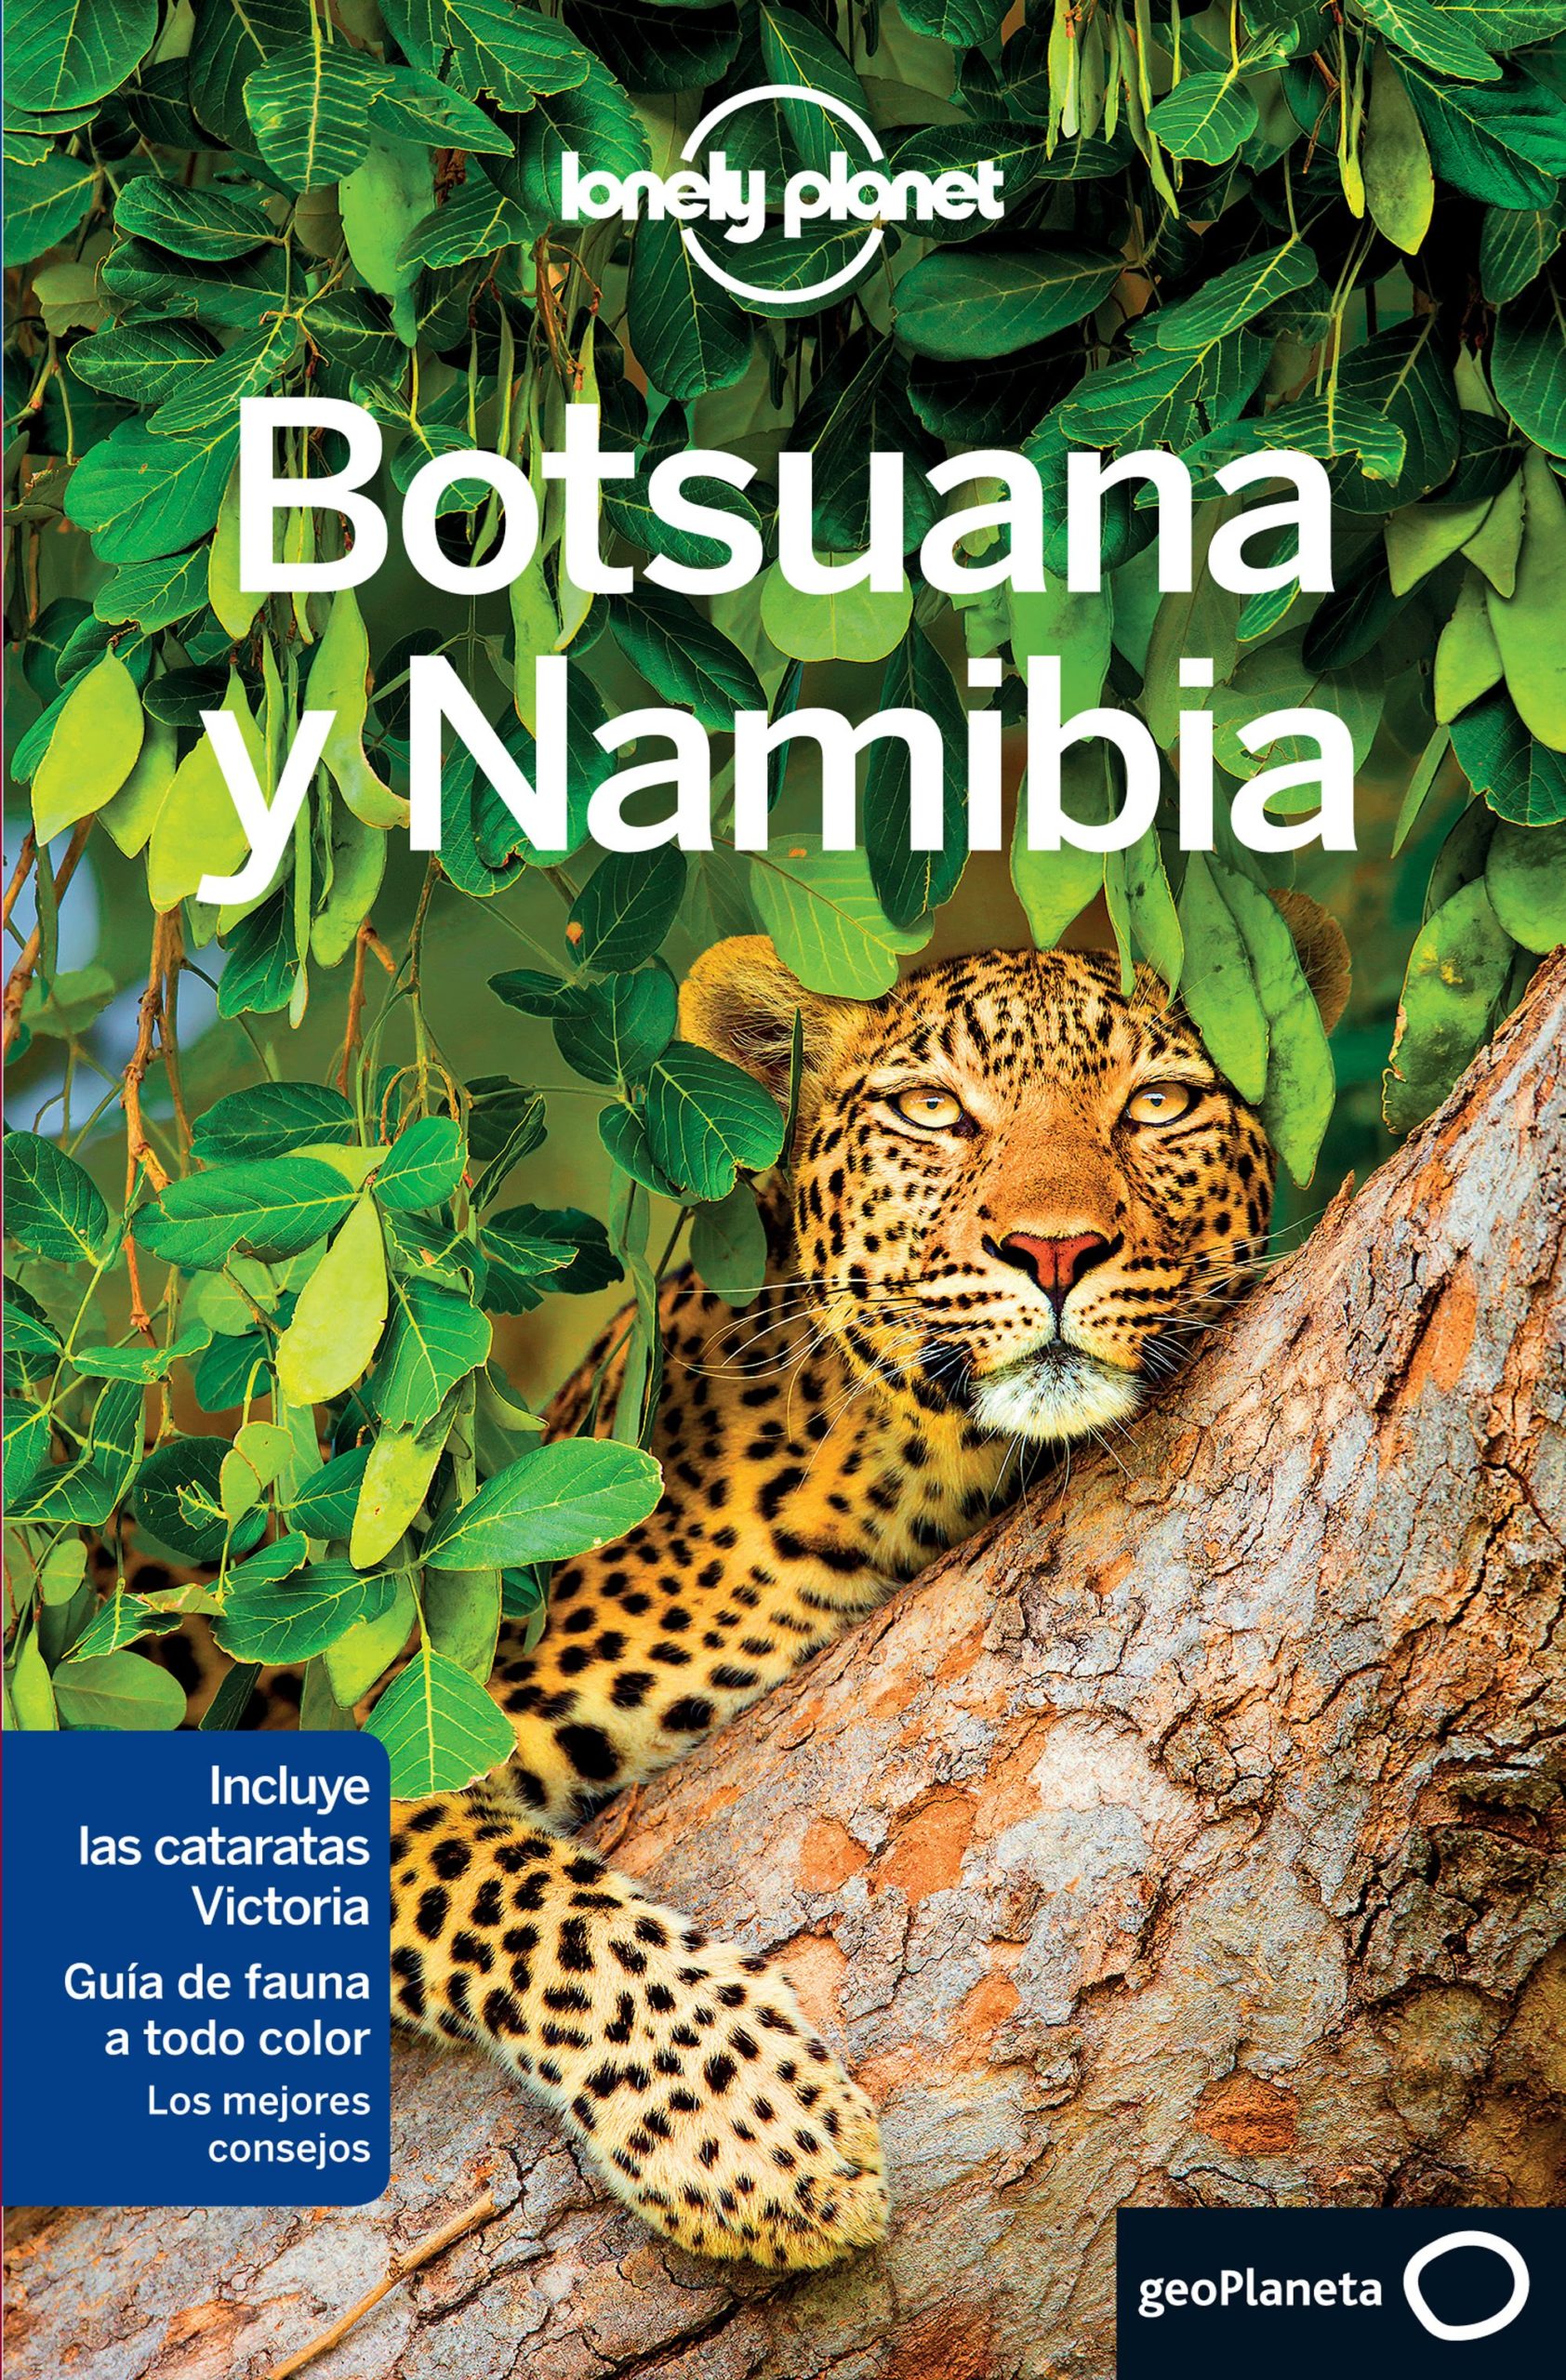 Botsuana y Namibia